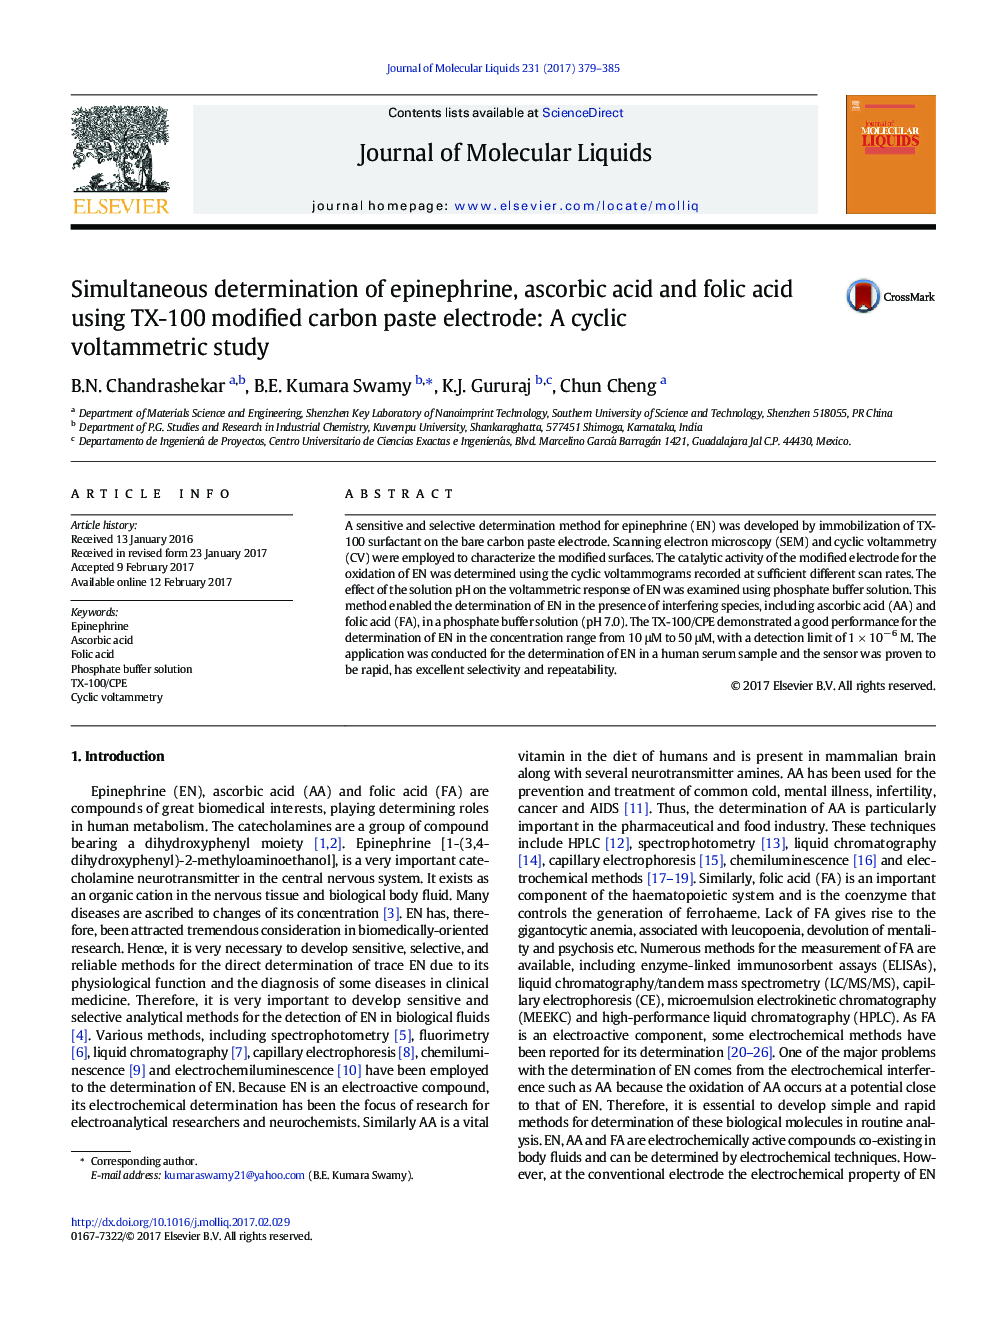 Simultaneous determination of epinephrine, ascorbic acid and folic acid using TX-100 modified carbon paste electrode: A cyclic voltammetric study